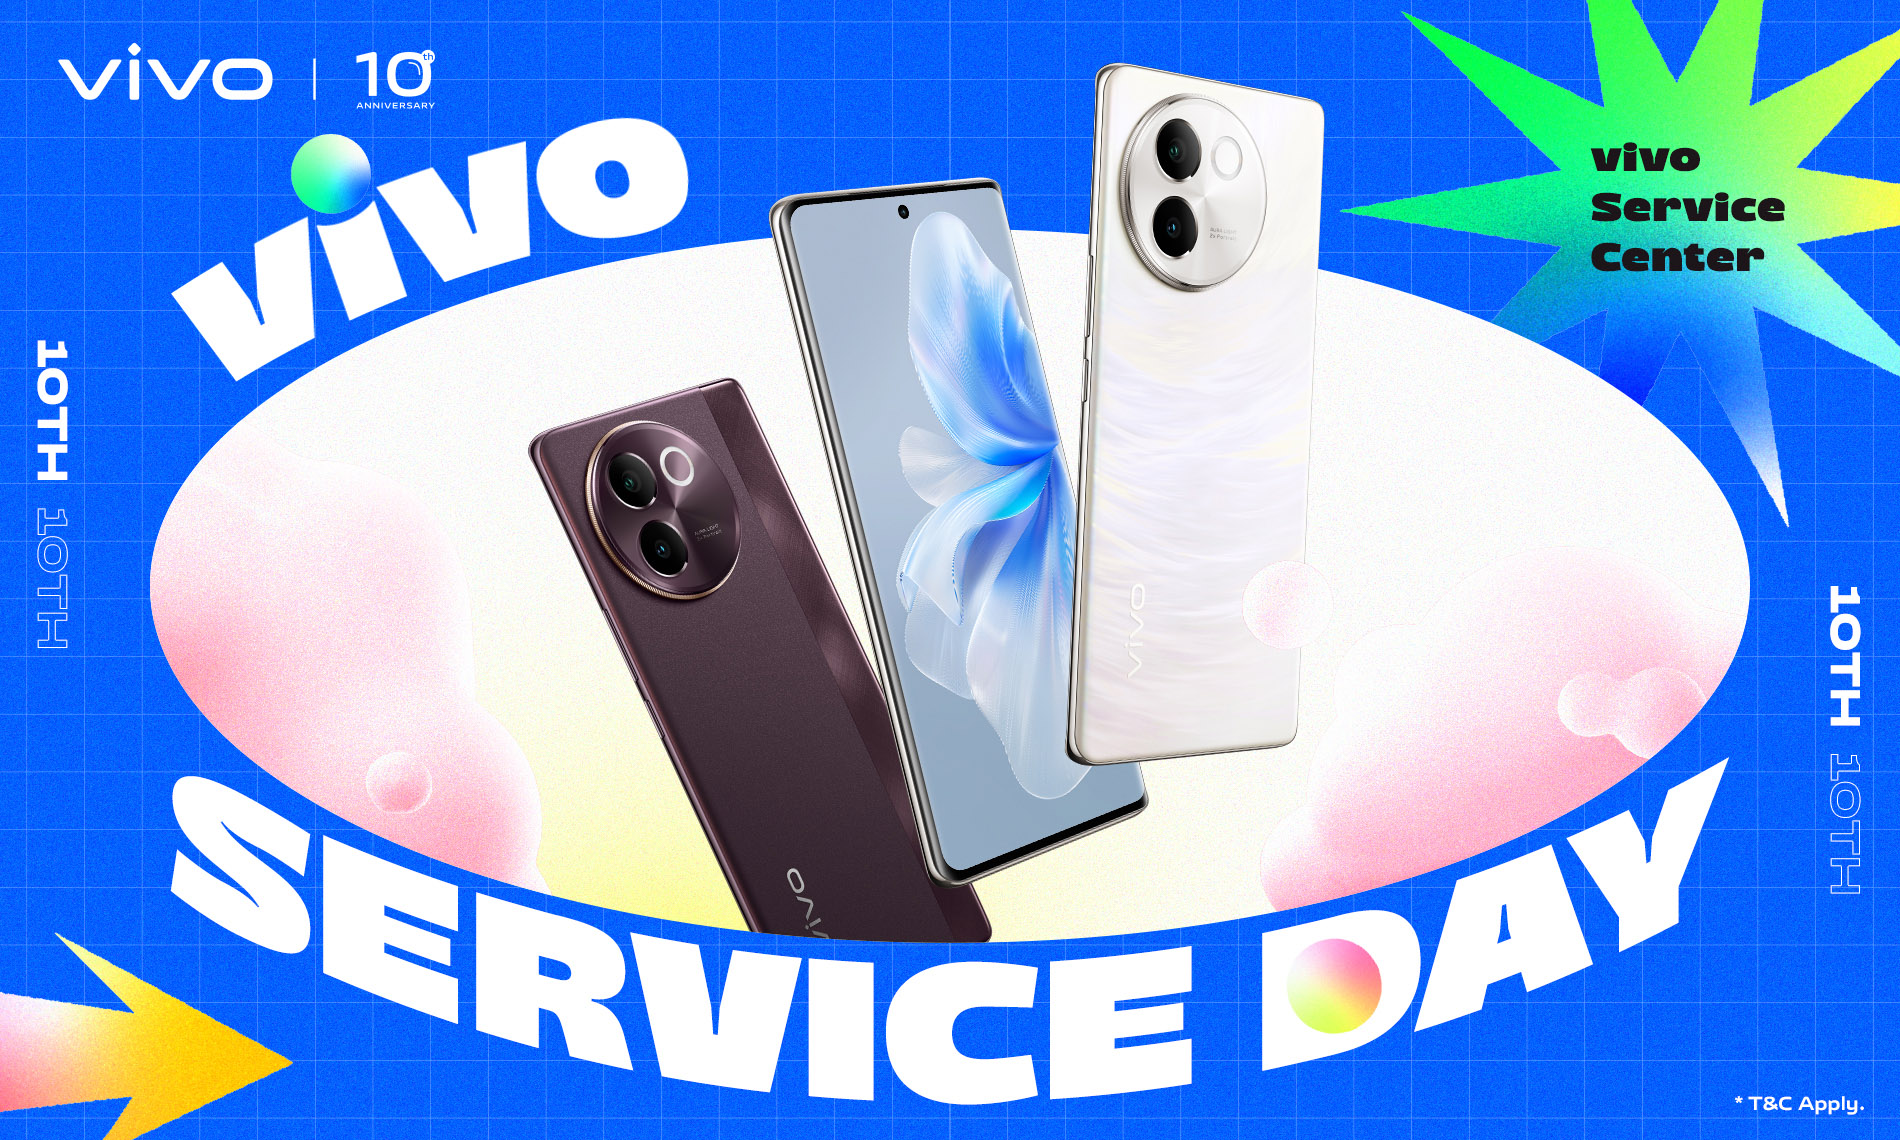 Enjoy vivo Service Day in May